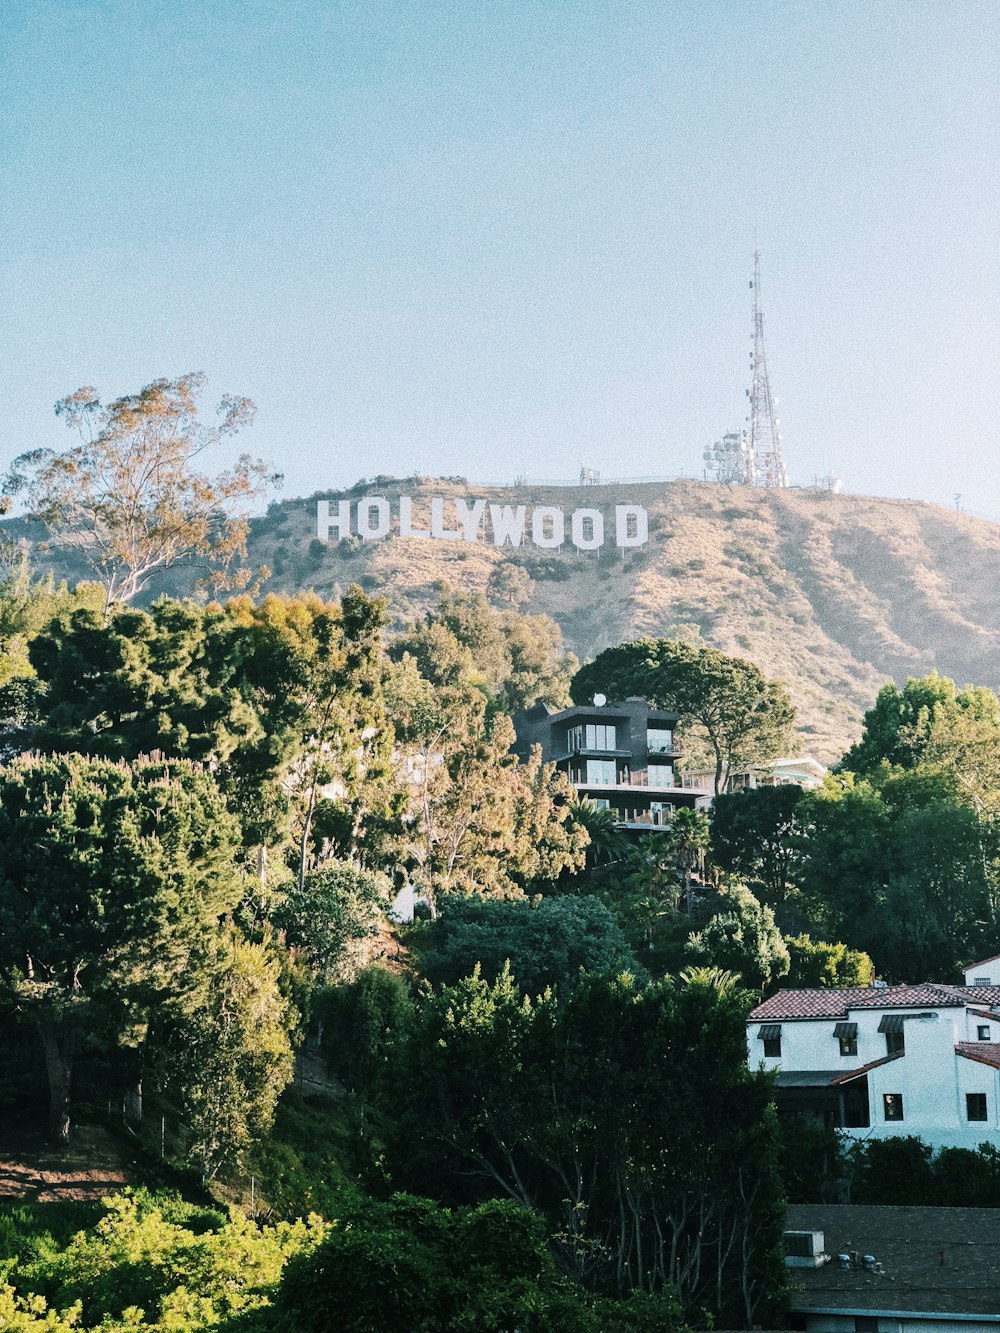 Hollywood sign, California